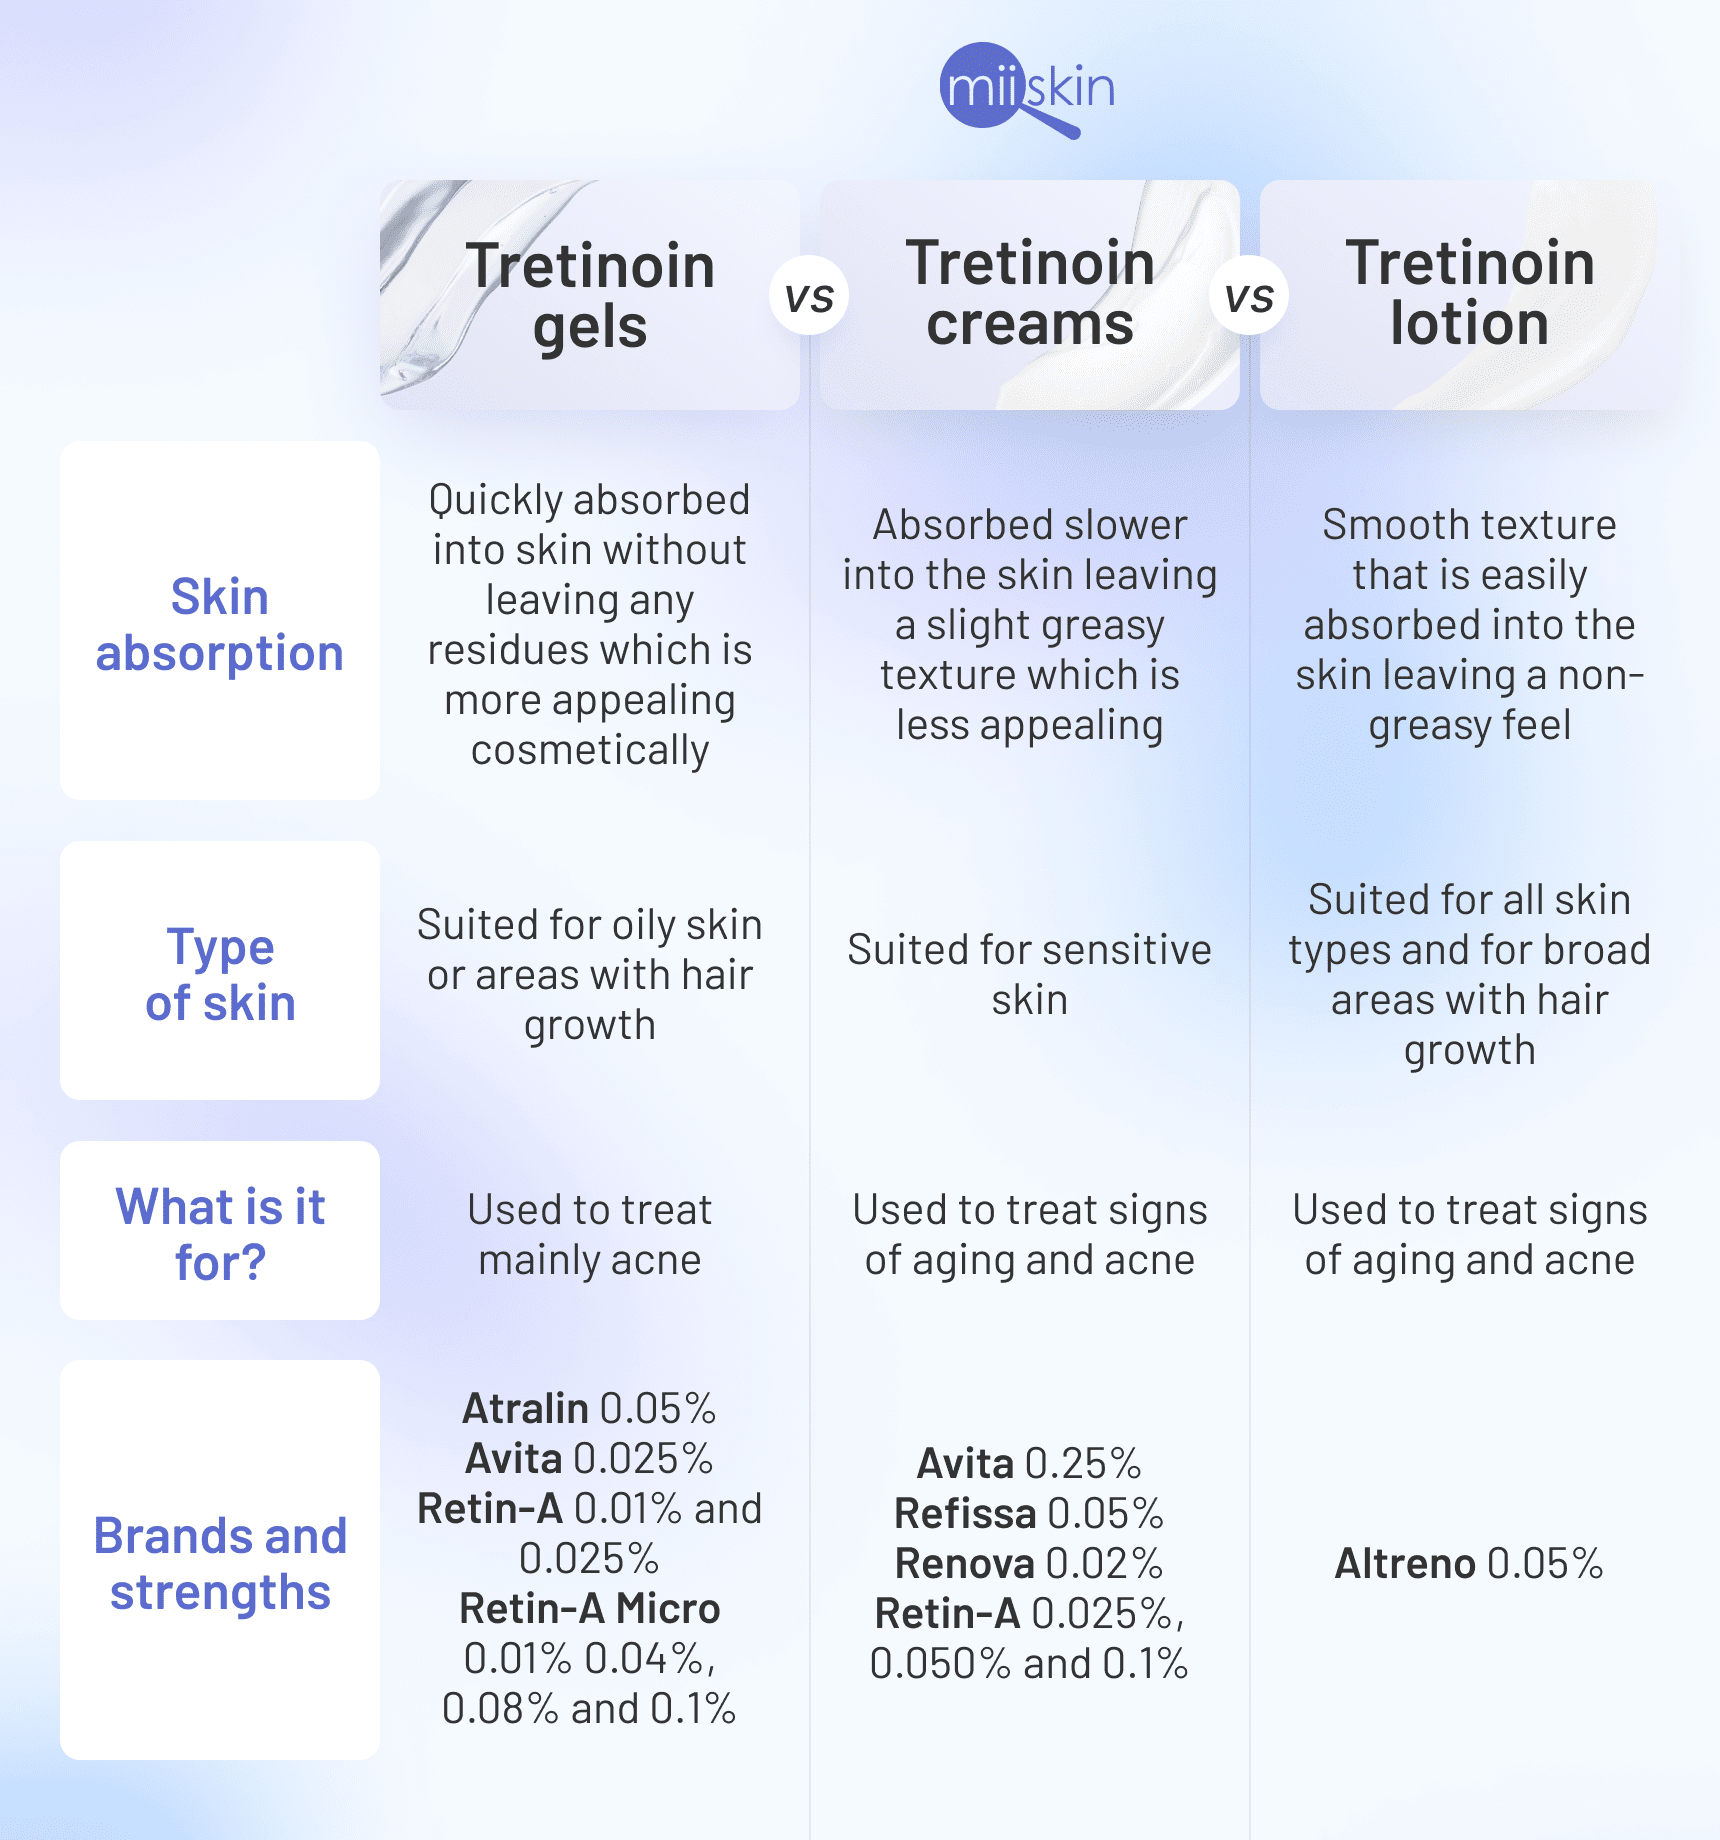 tretinoin gels vs creams